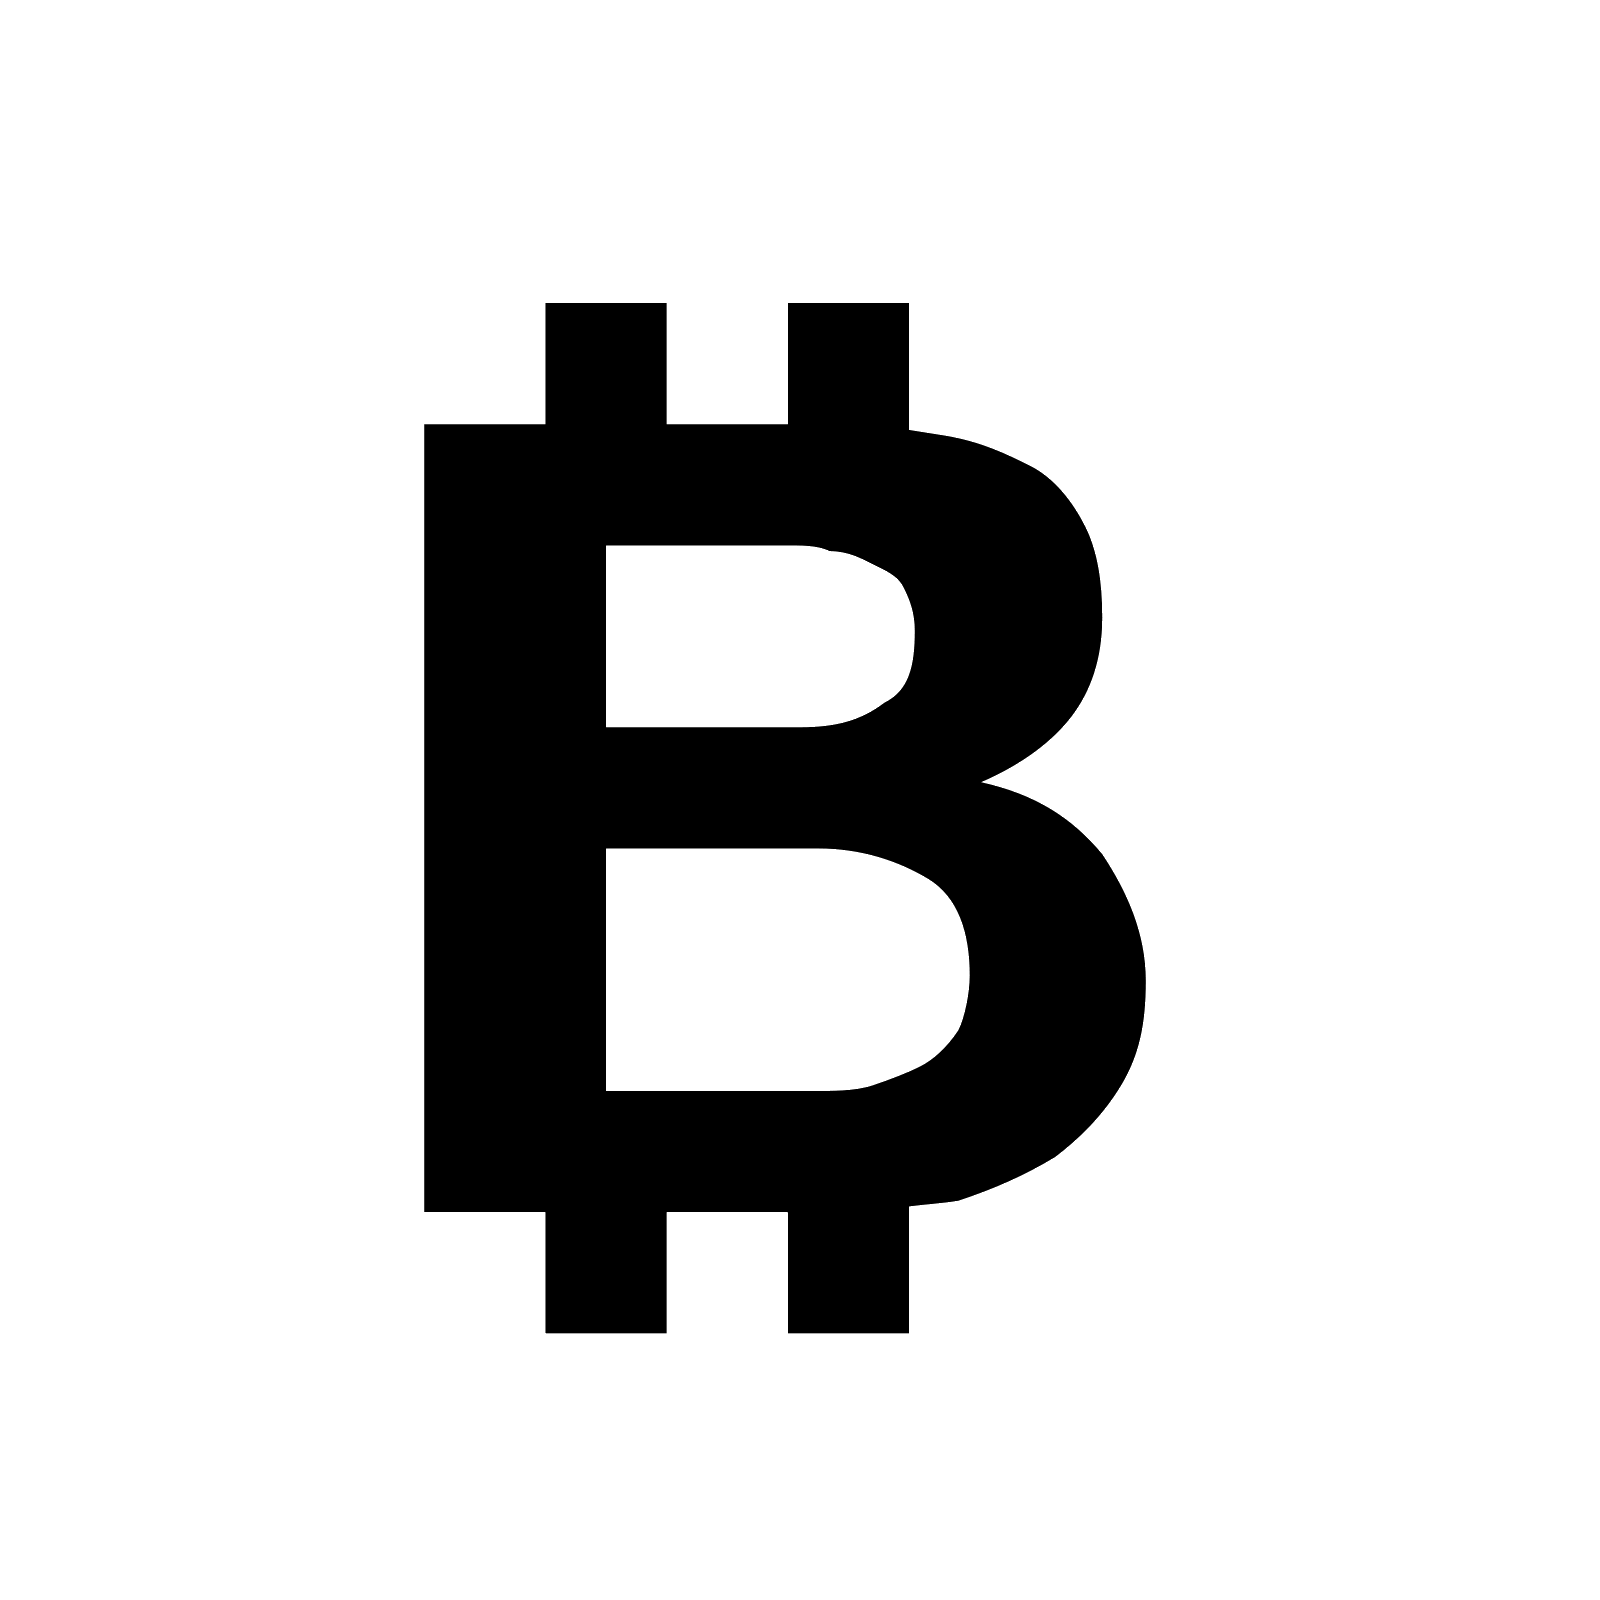 btc symbol vector